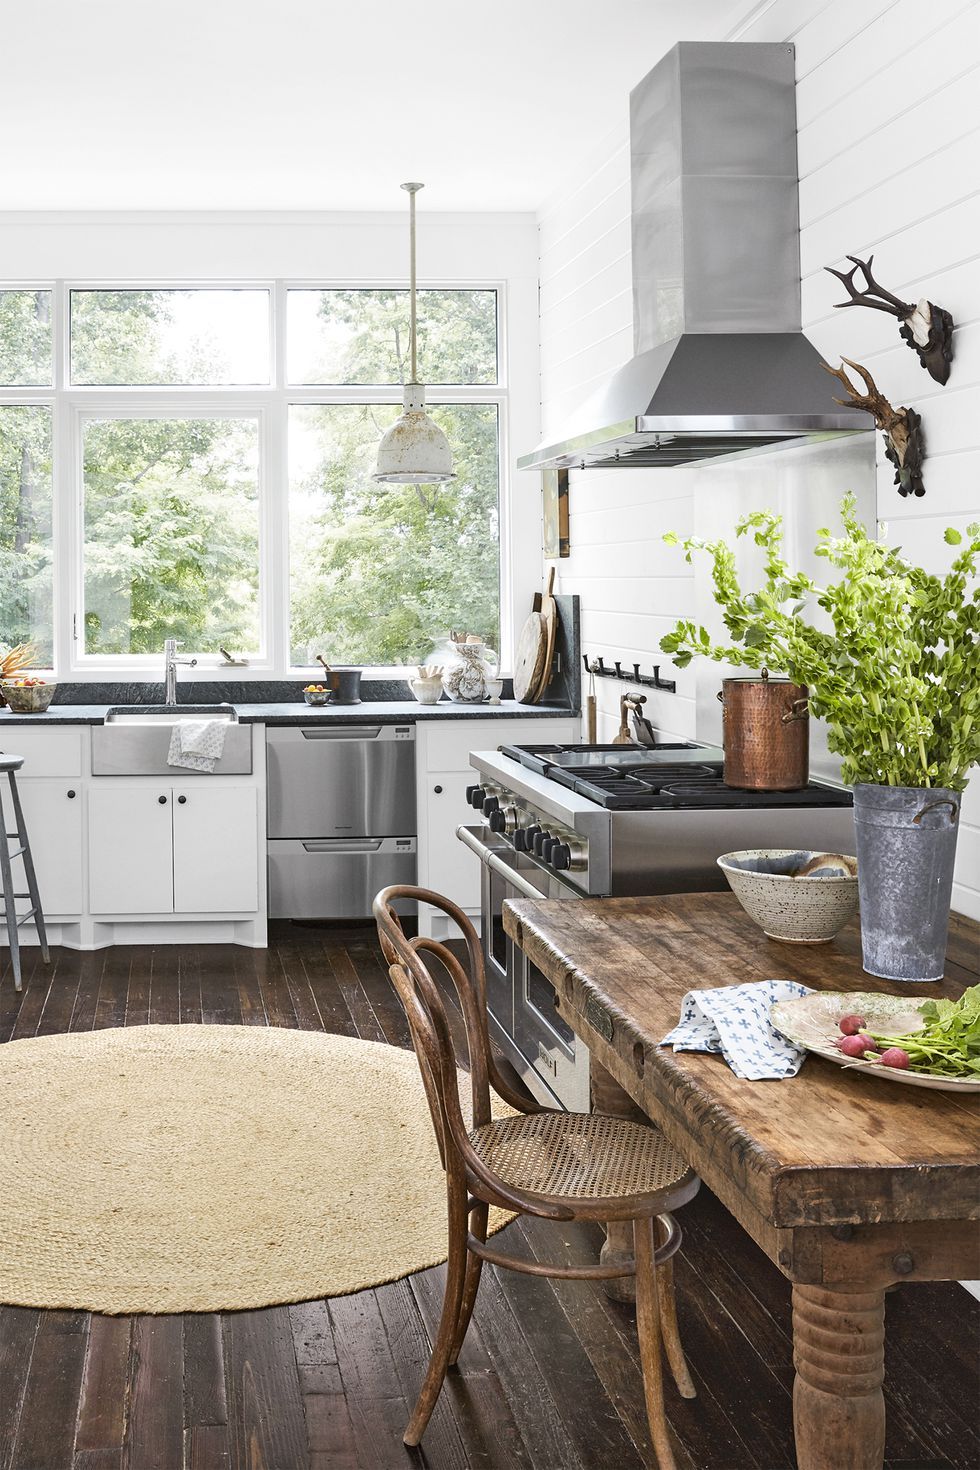 25 Best Kitchen Design Ideas   Pictures of Country Kitchen Decor